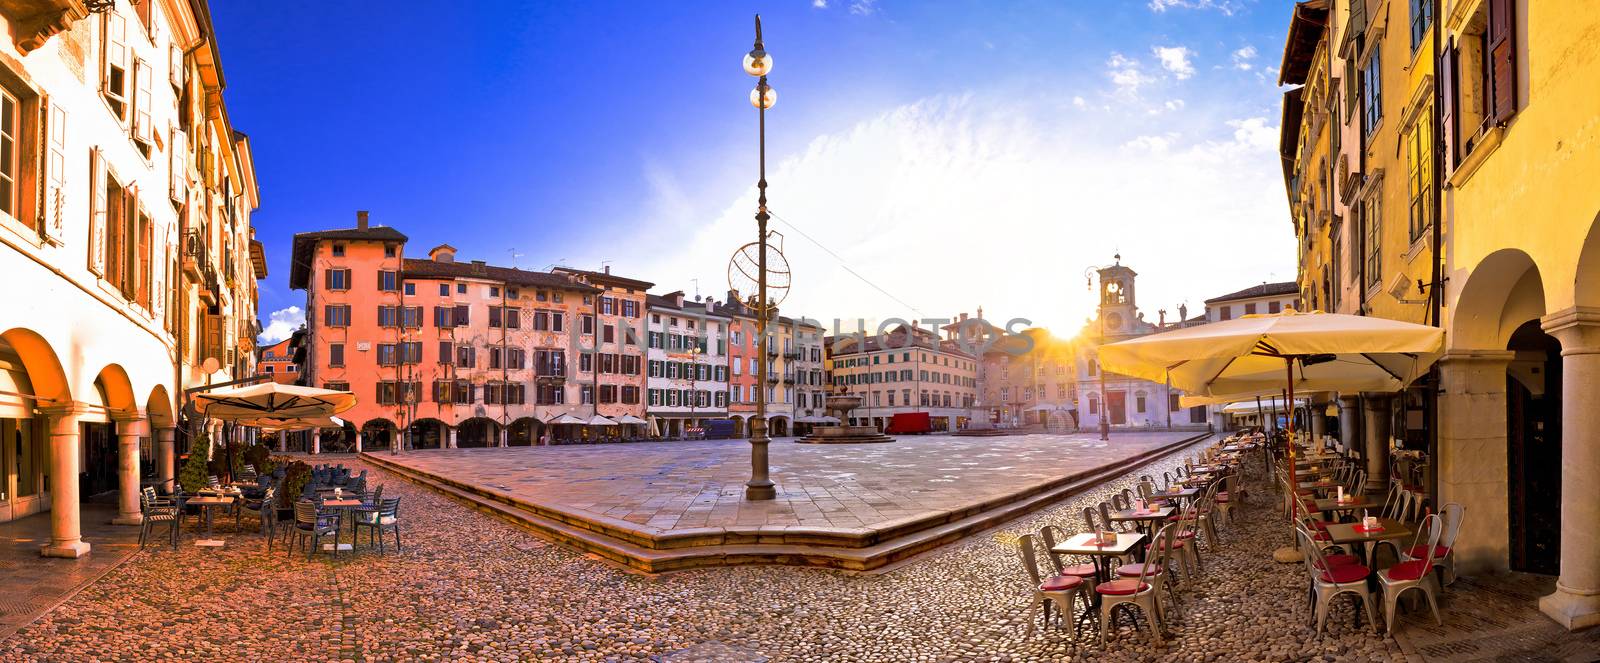 Piazza San Giacomo in Udine sunset panoramic view, town in Friuli Venezia Giulia region of Italy